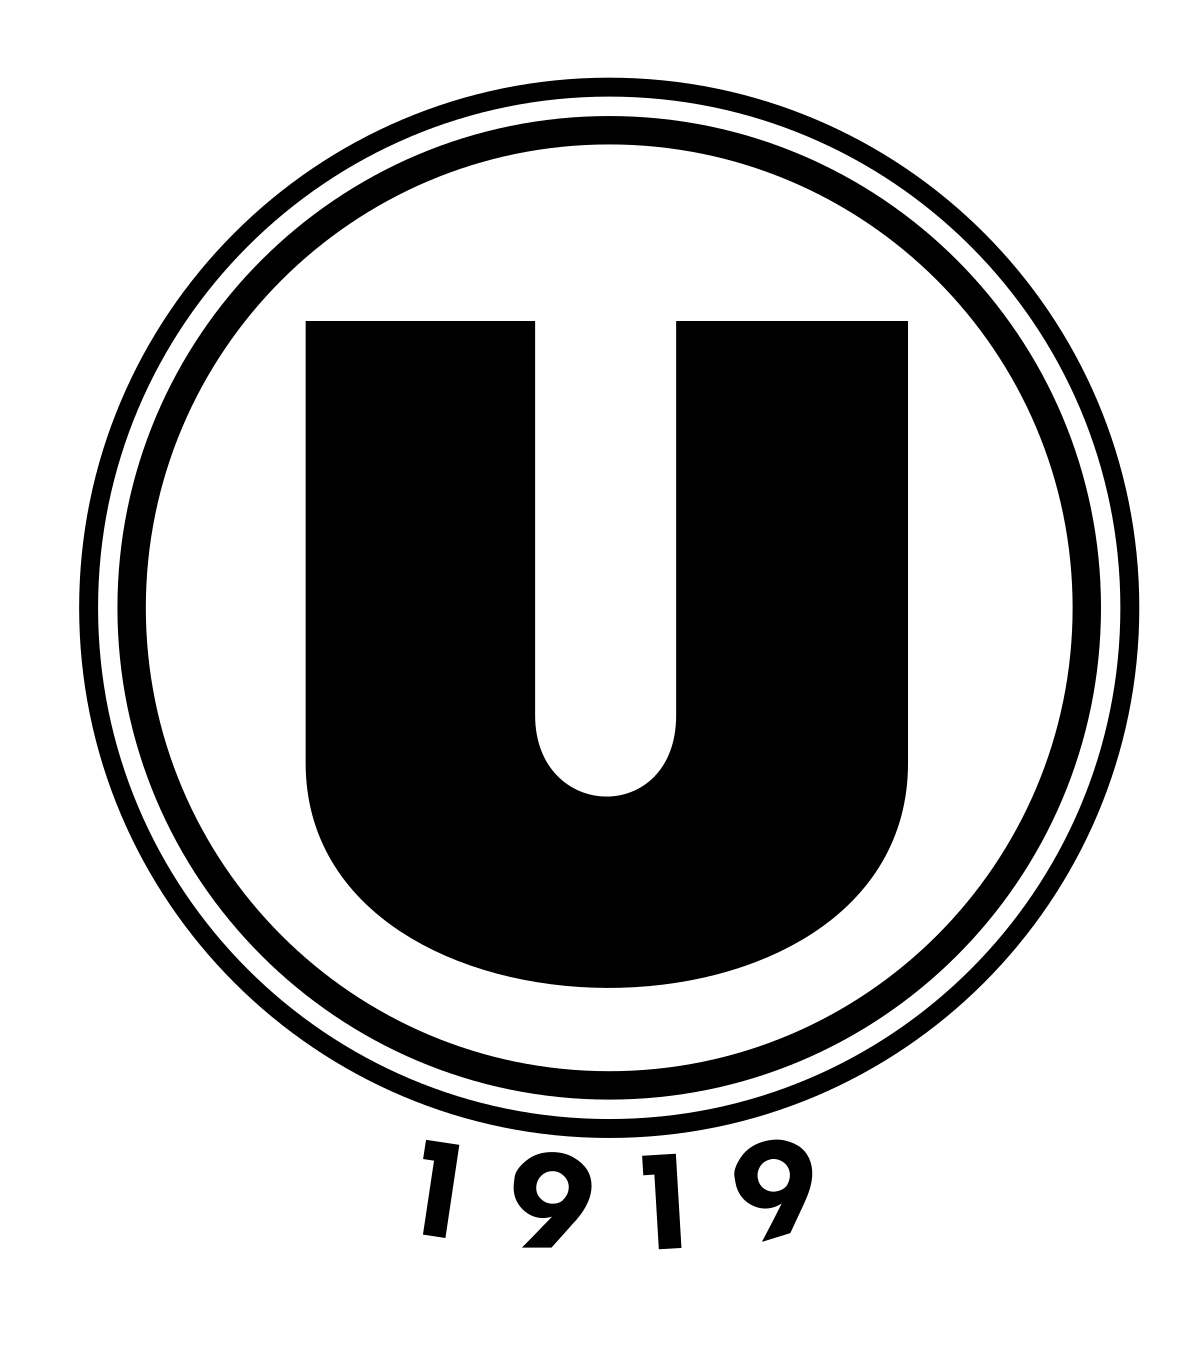 Logo Universitatea Cluj